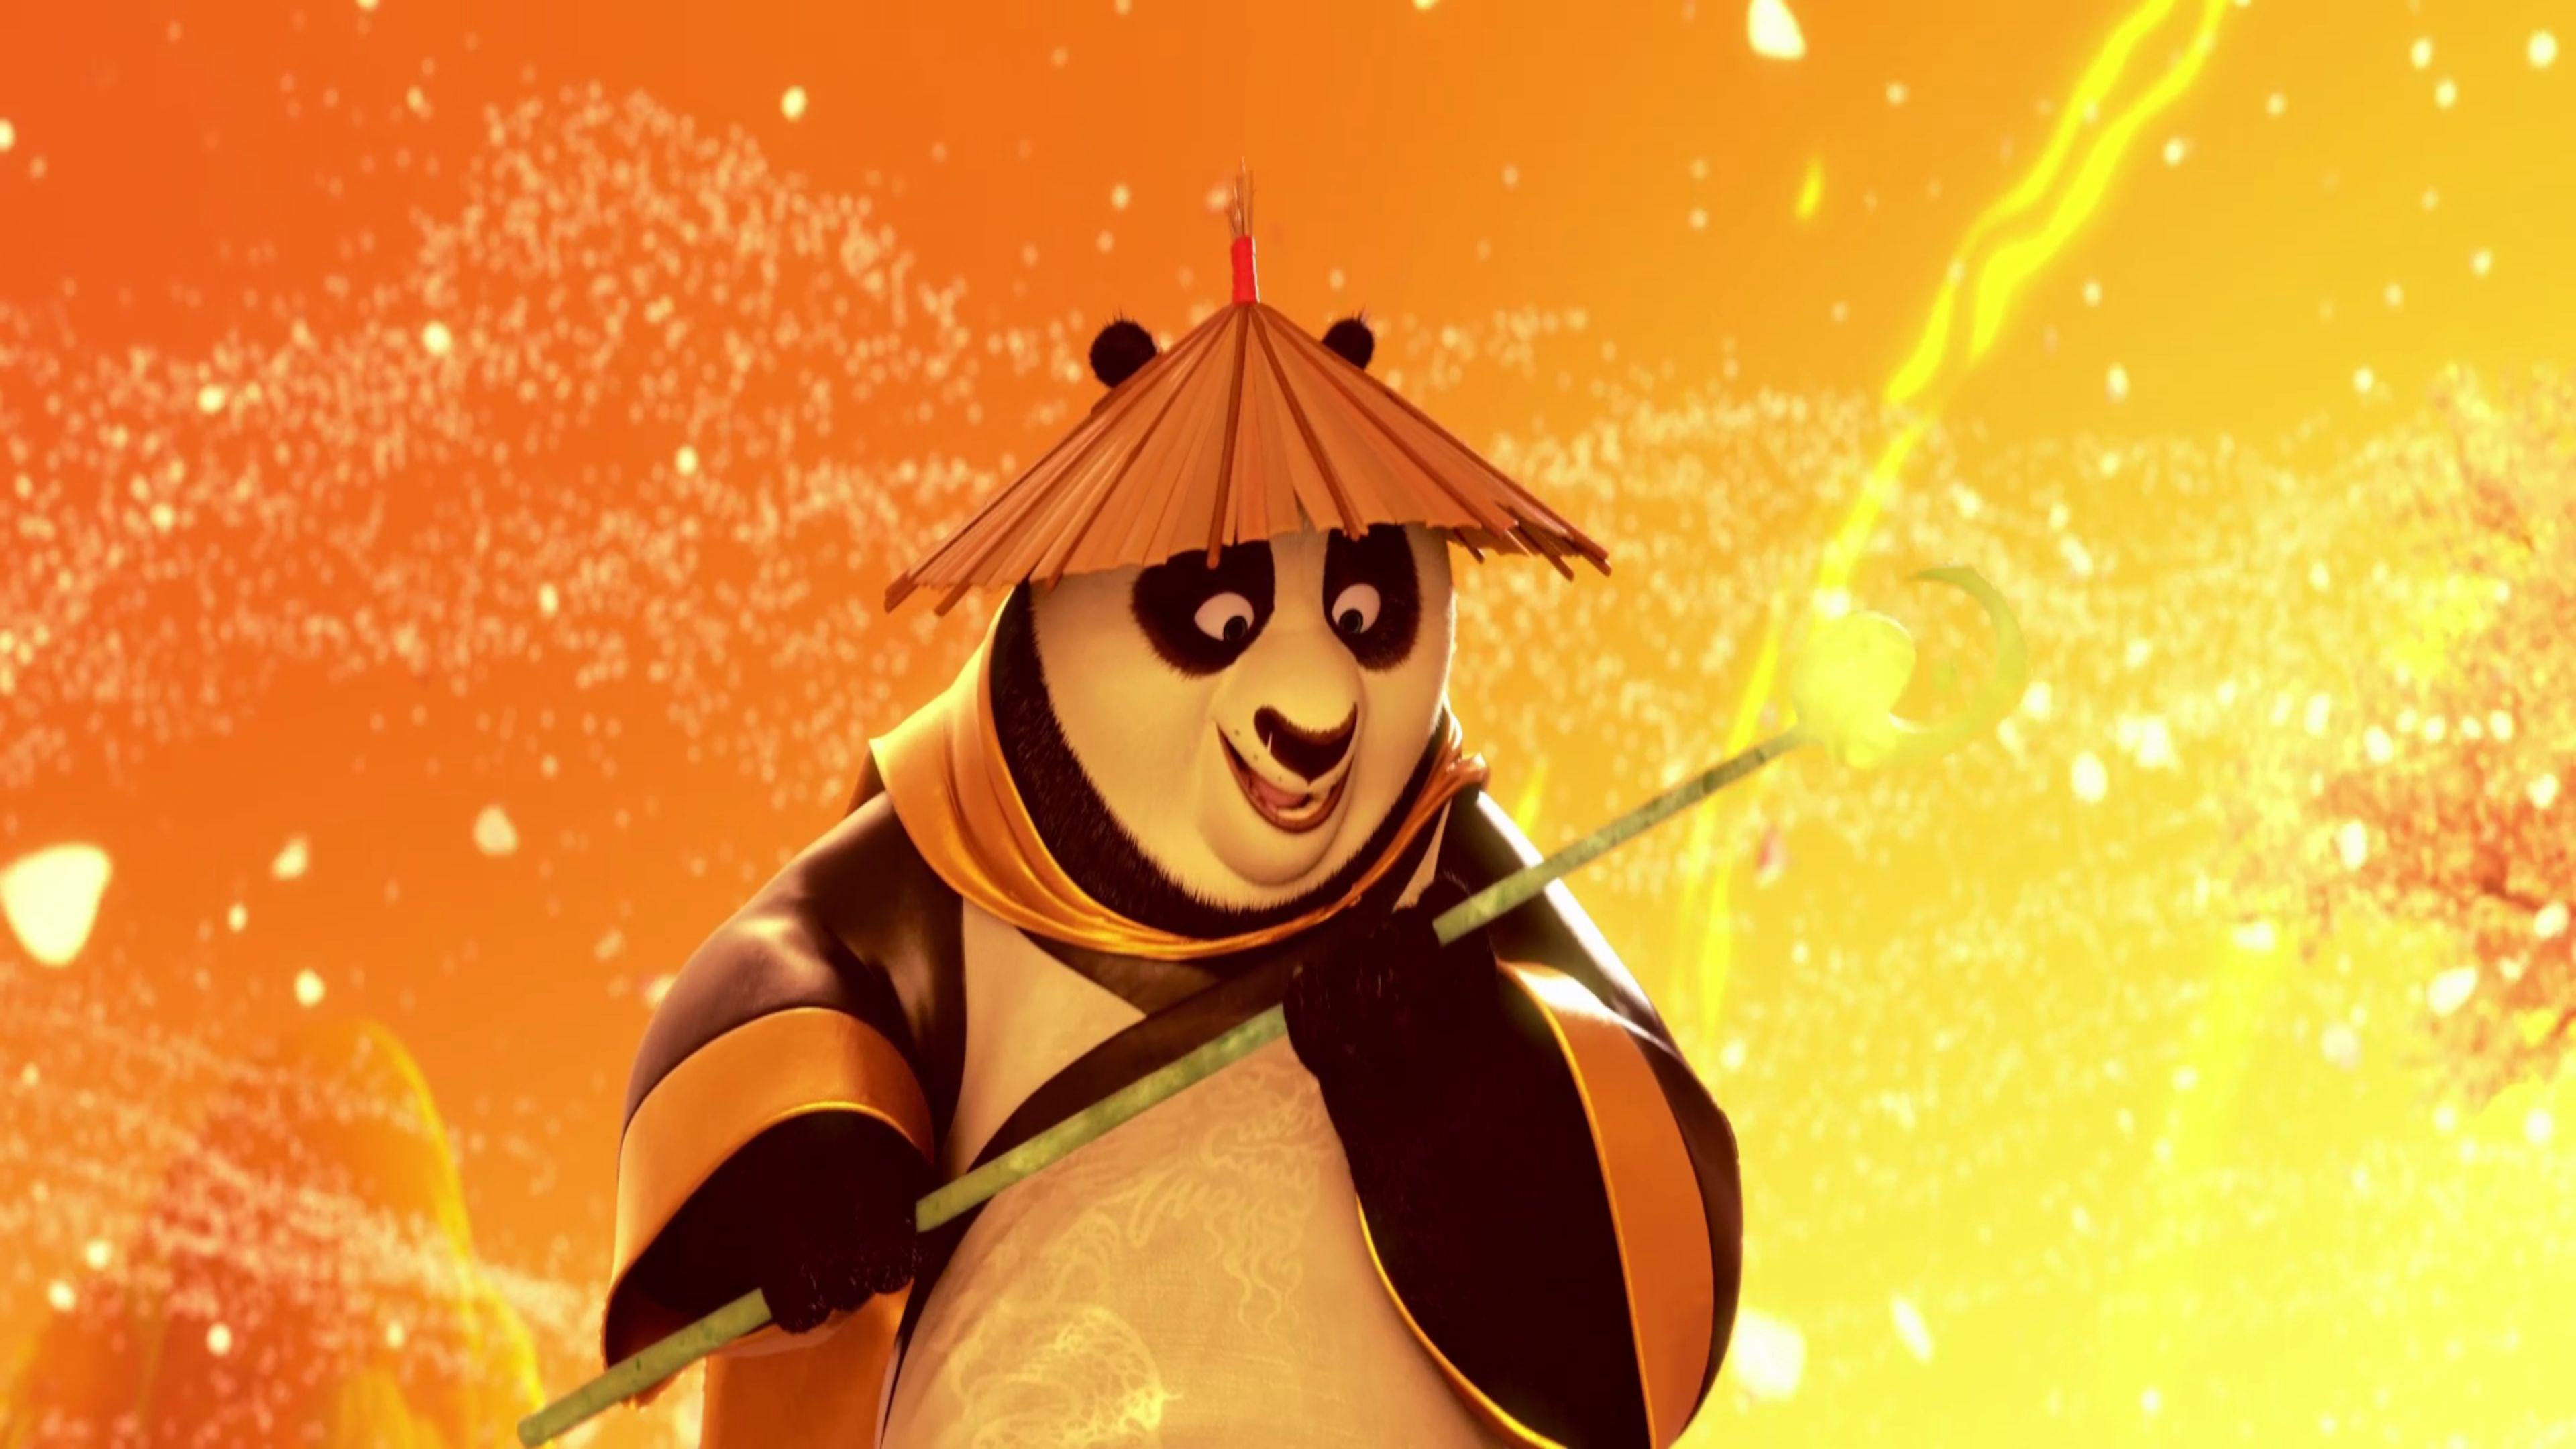 Screenshots 2016 4K Kung Fu Panda Movie Wallpaper. Free 4K Wallpaper